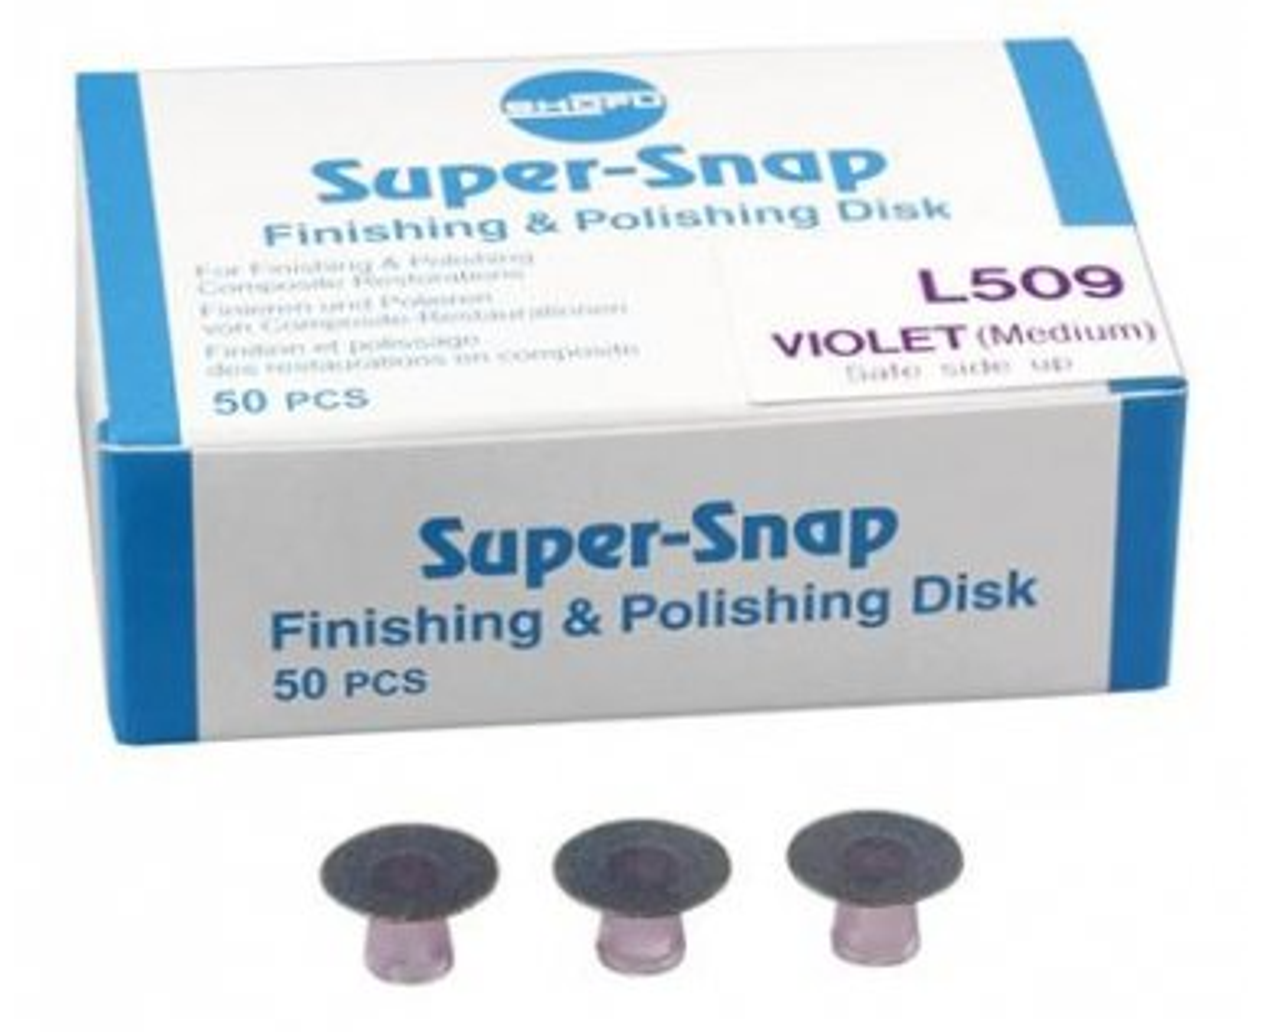 SHOFU SUPER-SNAP DISK REPLACEMENTS, L509